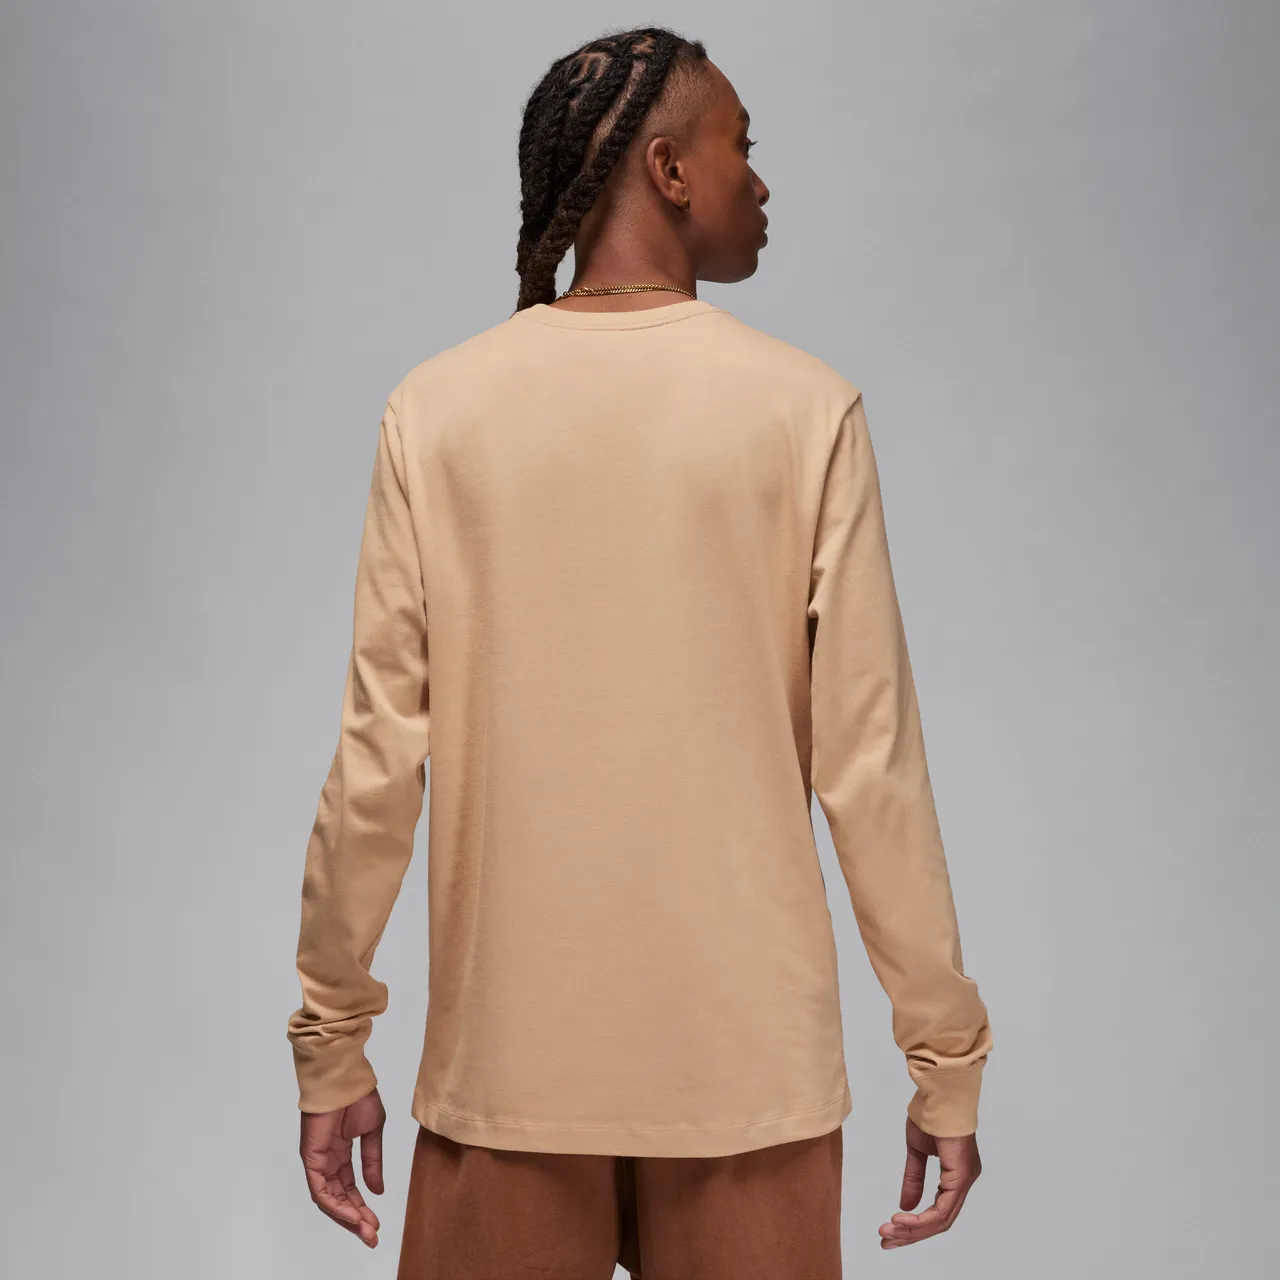 Jordan Brand Men's Graphic Long-Sleeve T-Shirt - Brown - Cotton